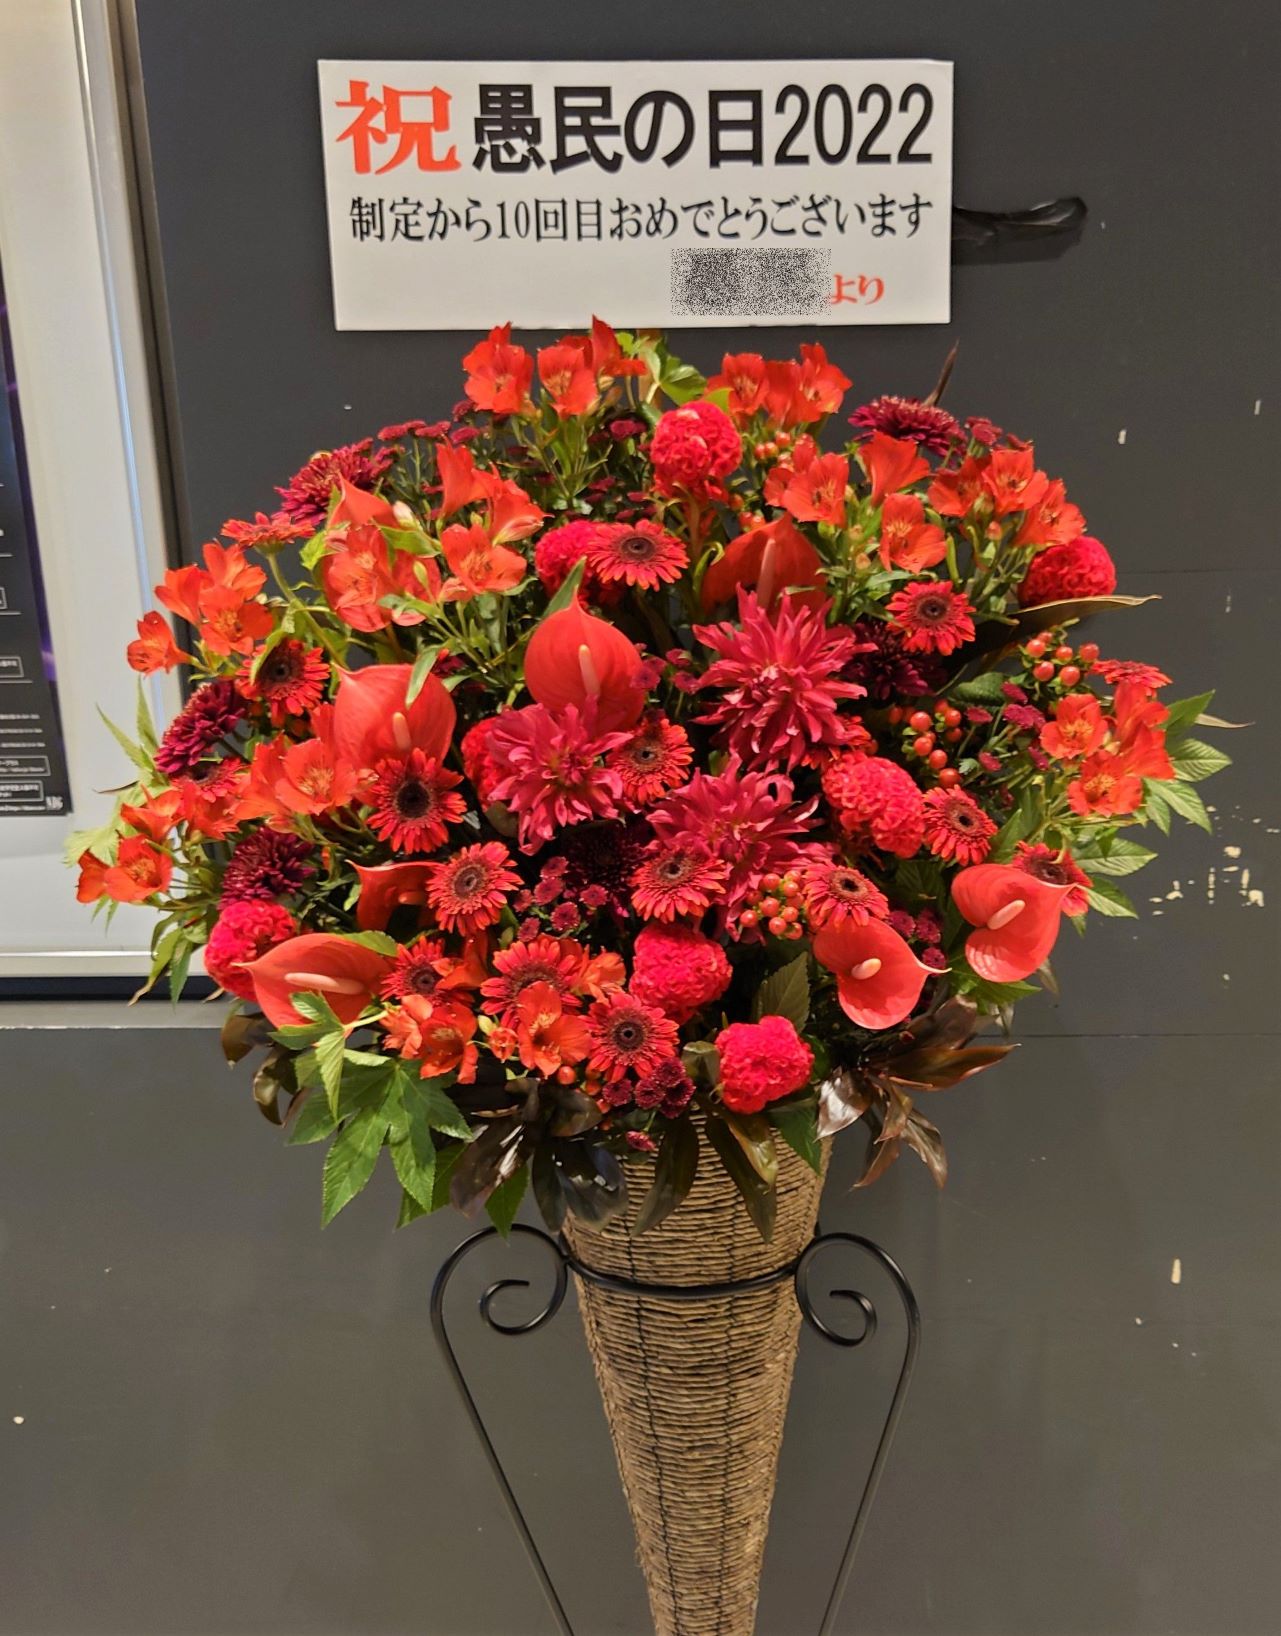 1000clubへ公演祝いの赤系スタンド花を配達しました。【横浜花屋の花束・スタンド花・胡蝶蘭・バルーン・アレンジメント配達事例1048】